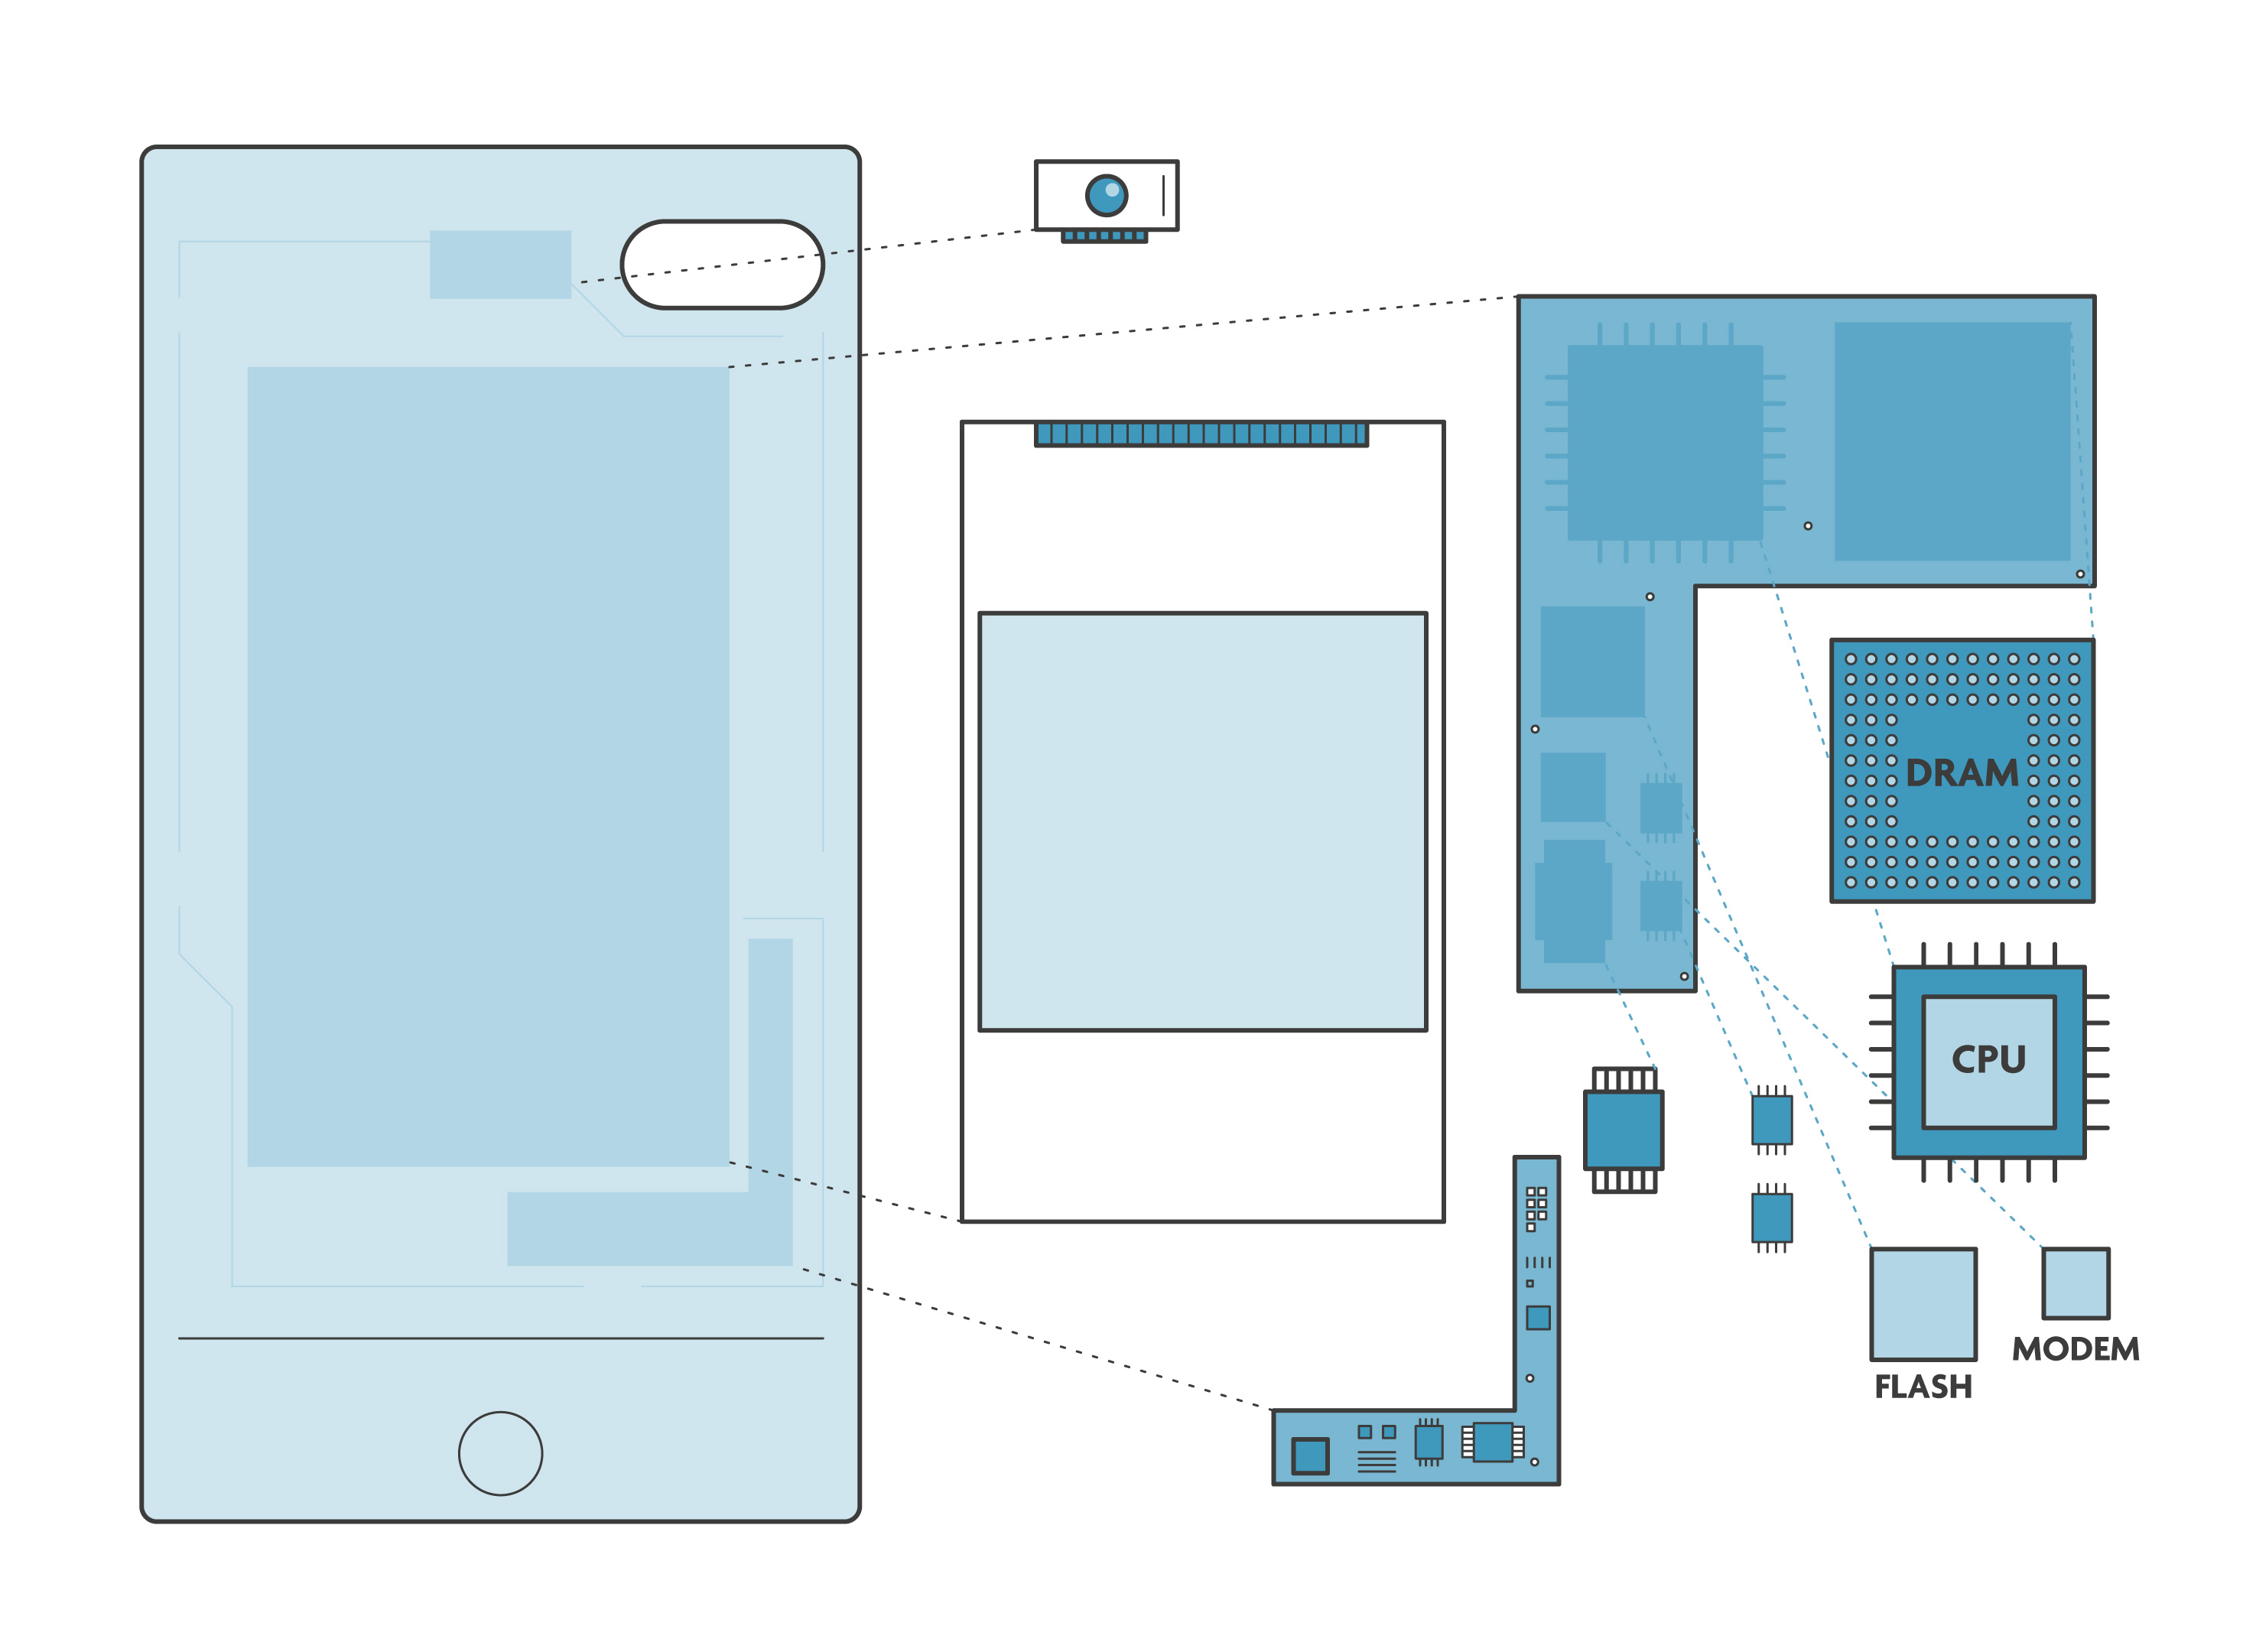 Figure 1: Main building blocks of a mobile phone – a schematic representation.